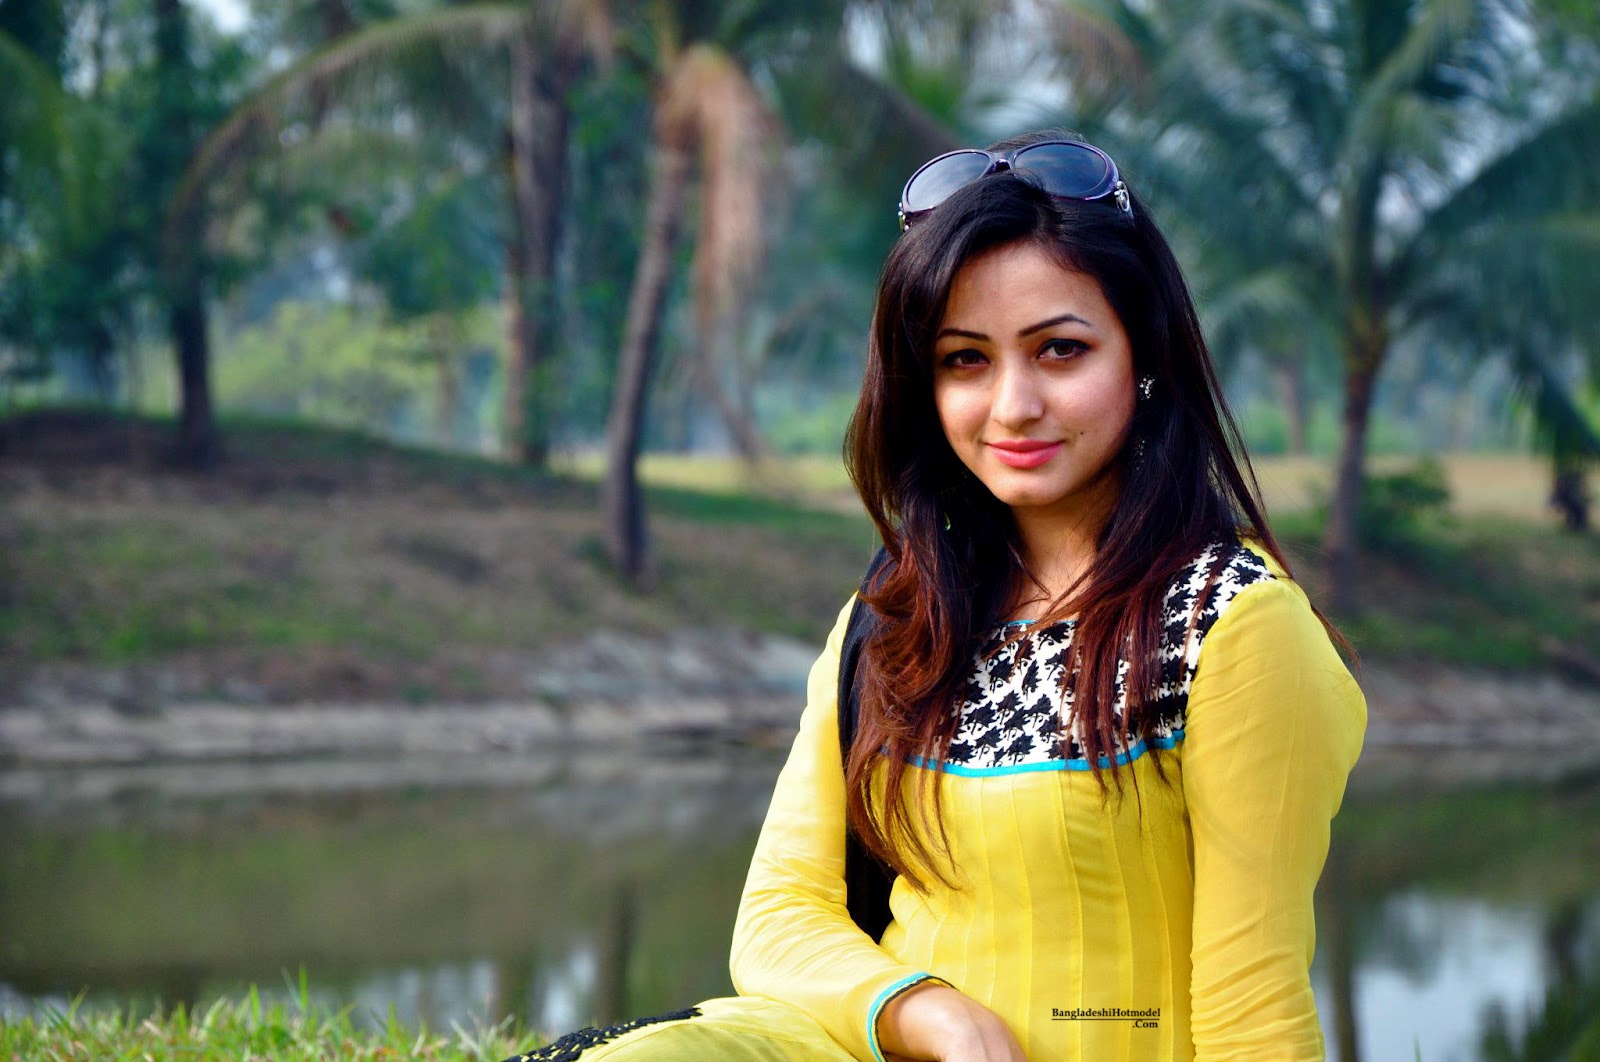 U k hot girls bangladeshi